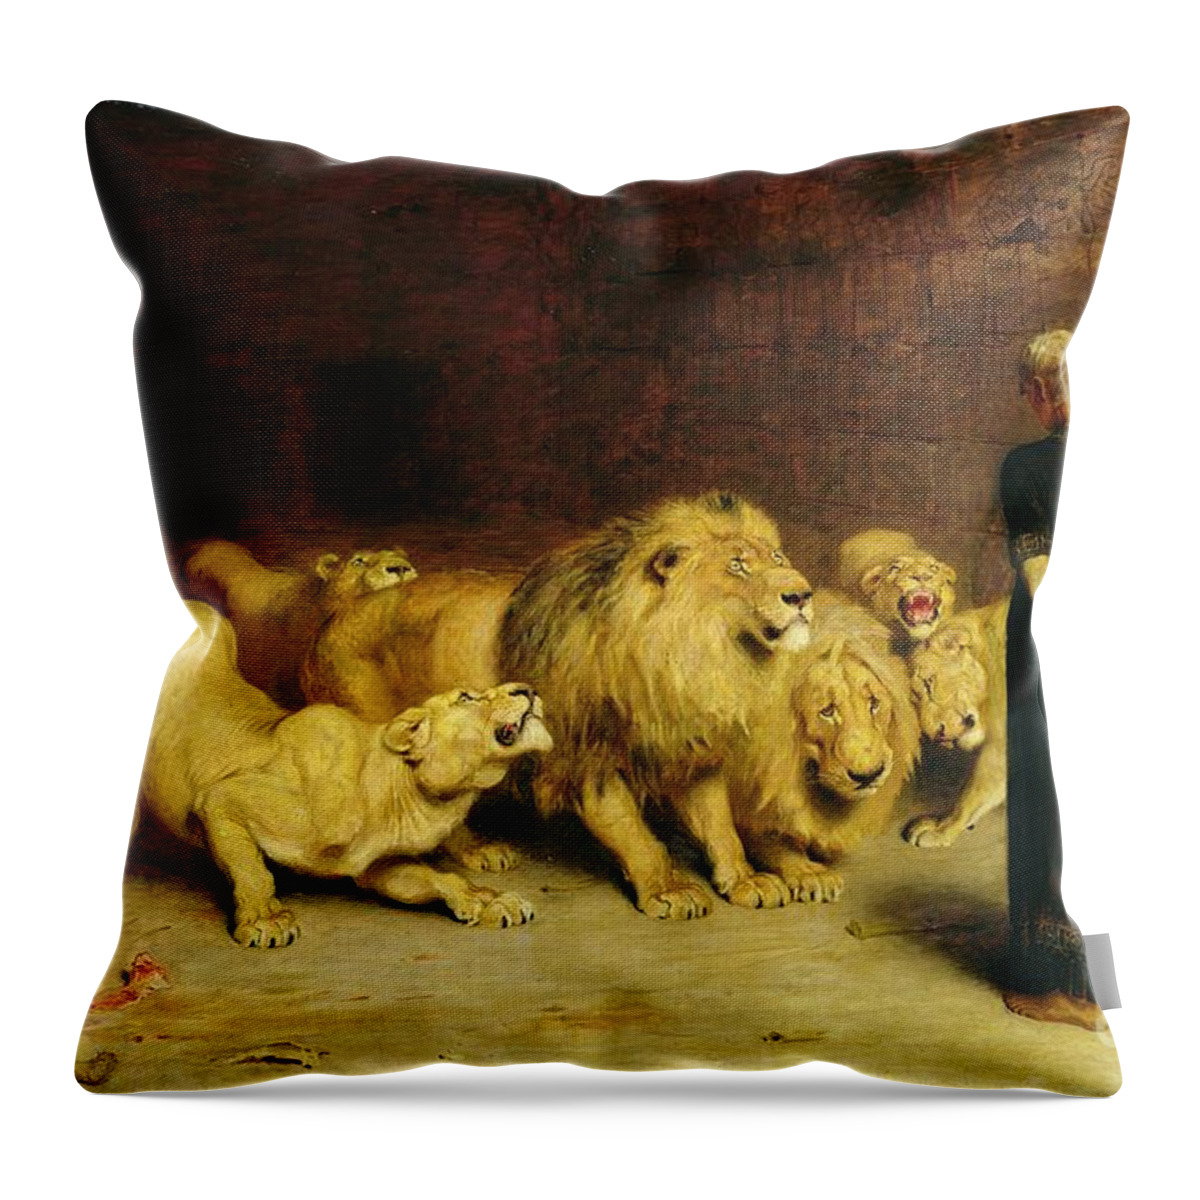 Daniel In The Lions Den Throw Pillow featuring the painting Daniel in the Lions Den by Briton Riviere